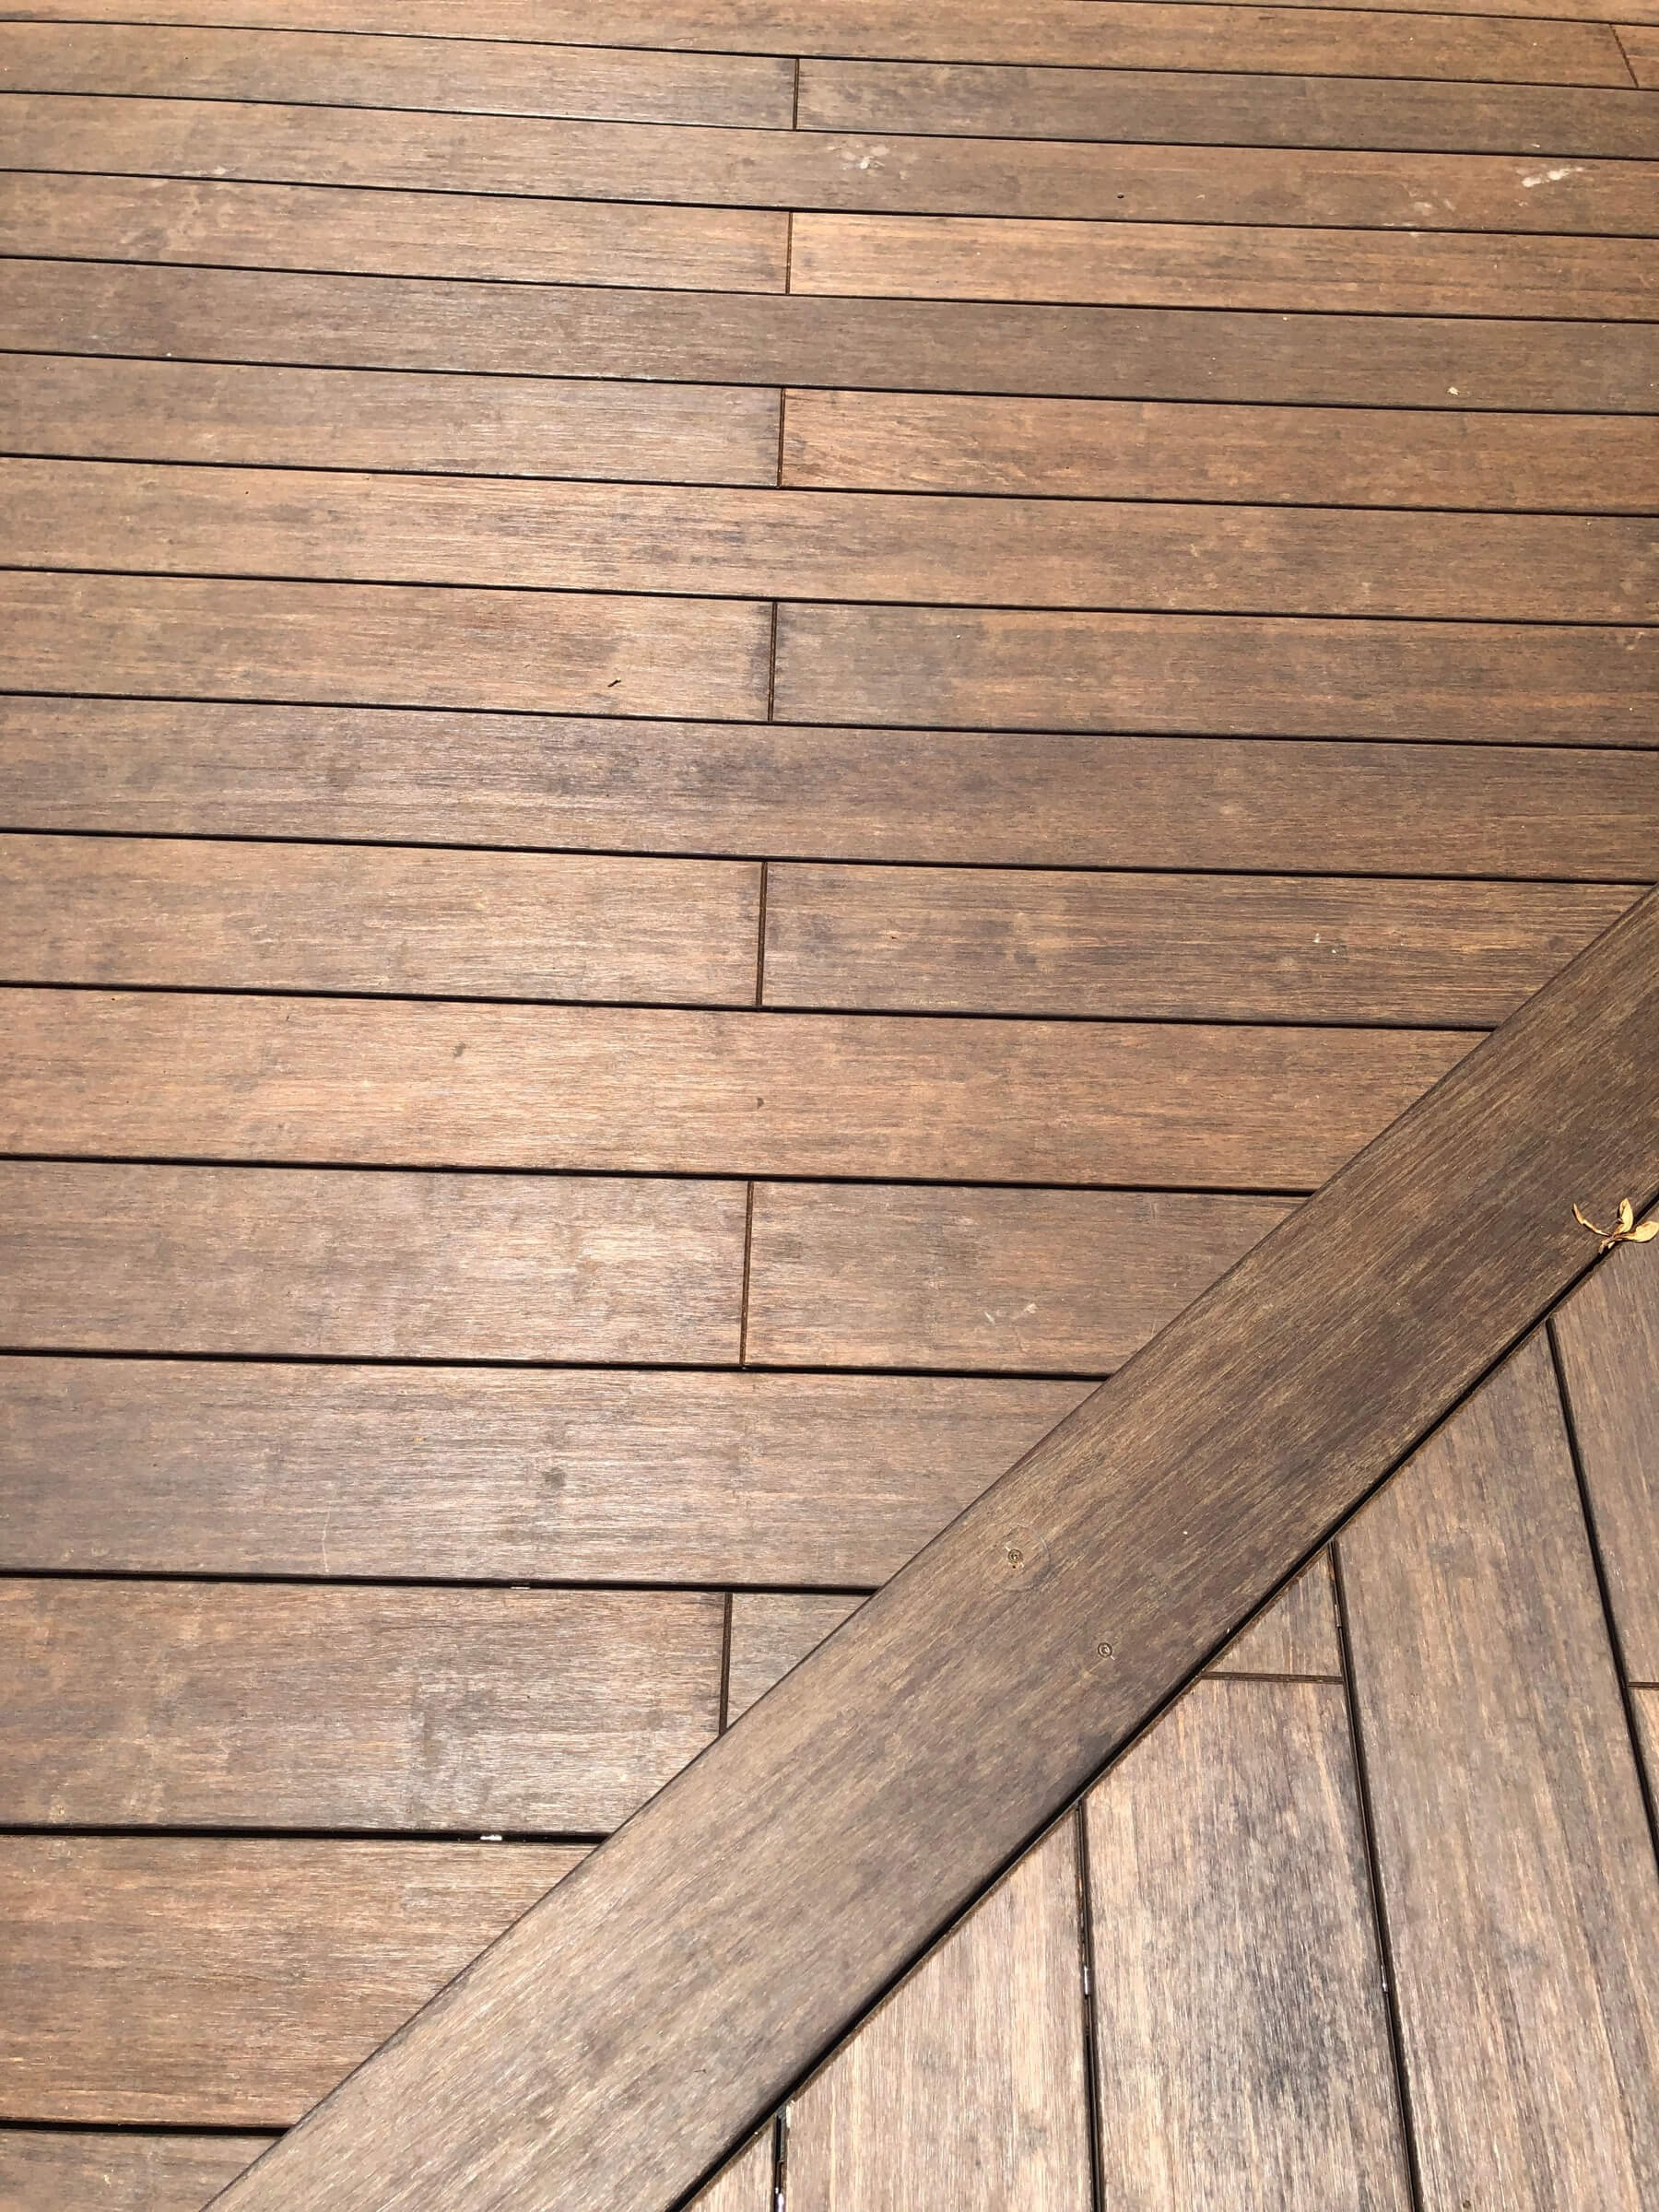 Porch Flooring